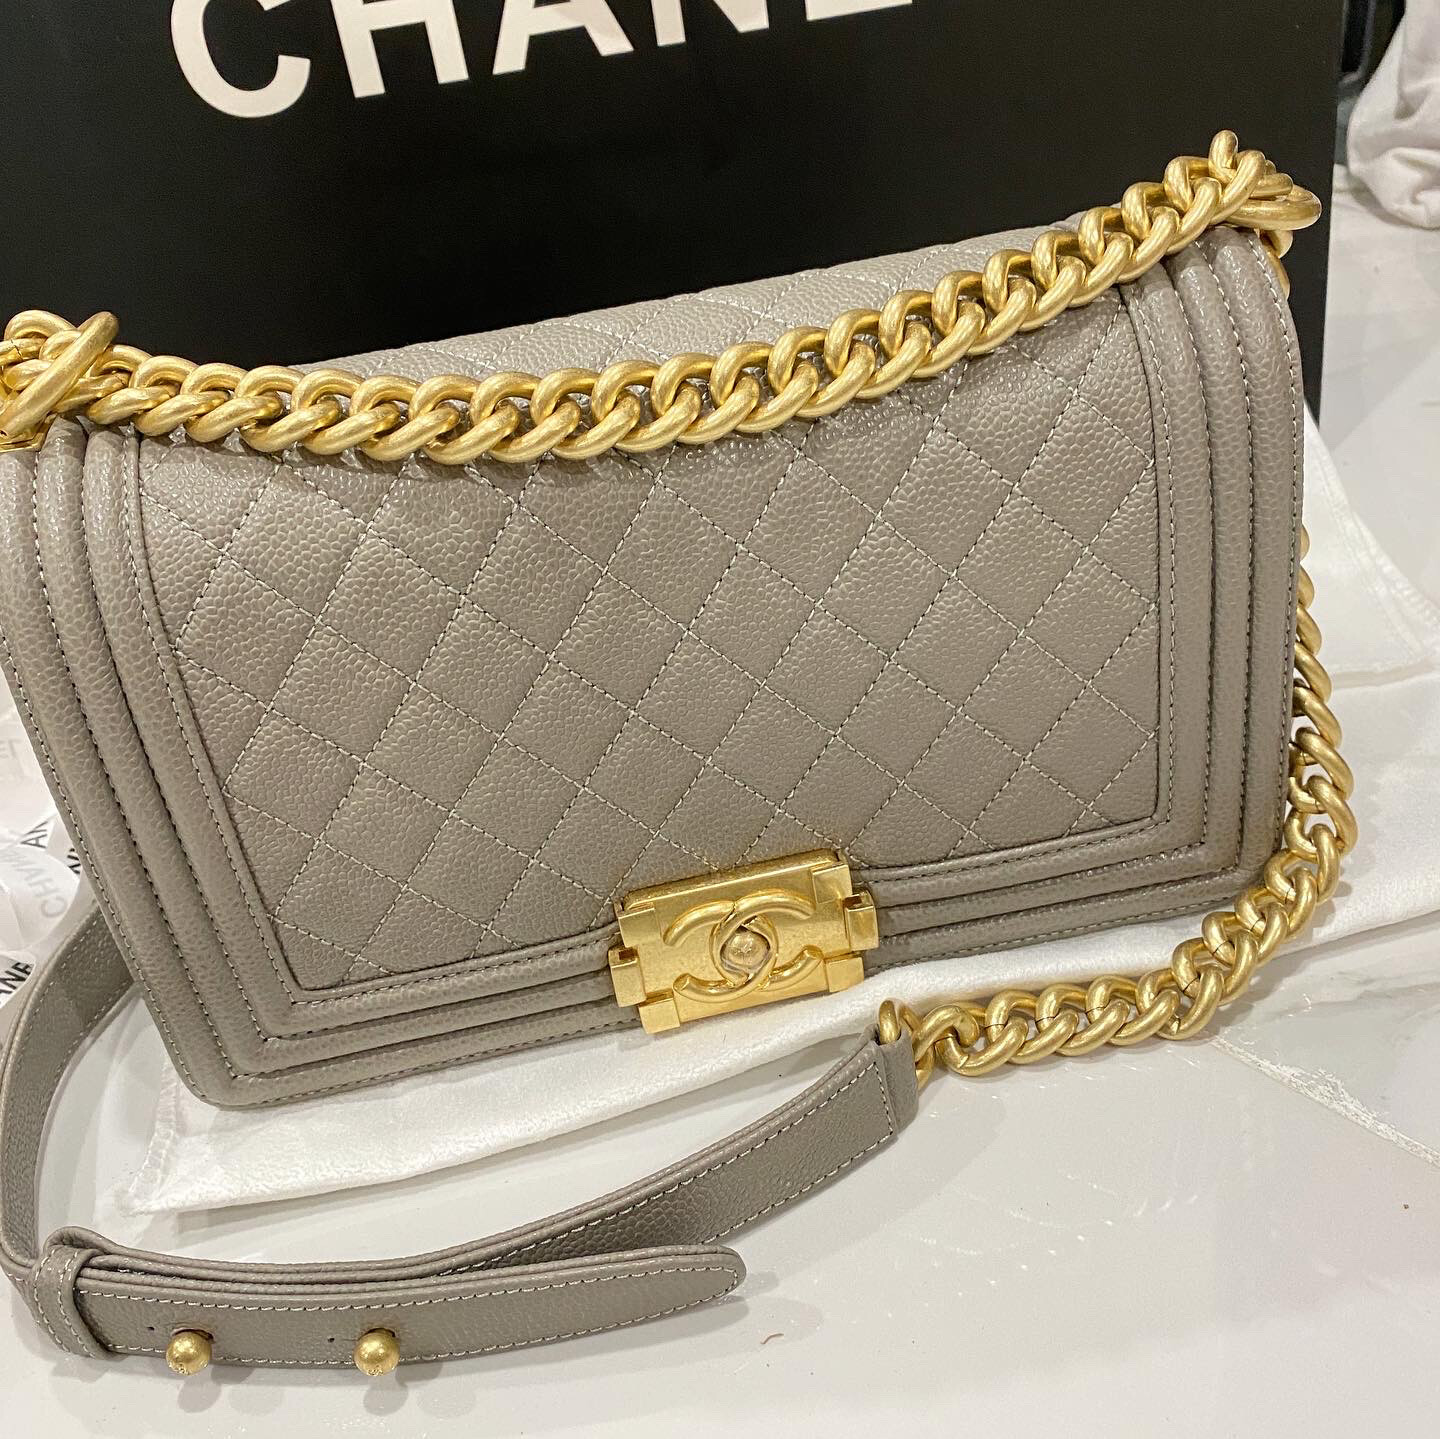 PRE ORDER - 1:1 Chanel Le Boy bag - Grey Caviar / Old Medium 25cm